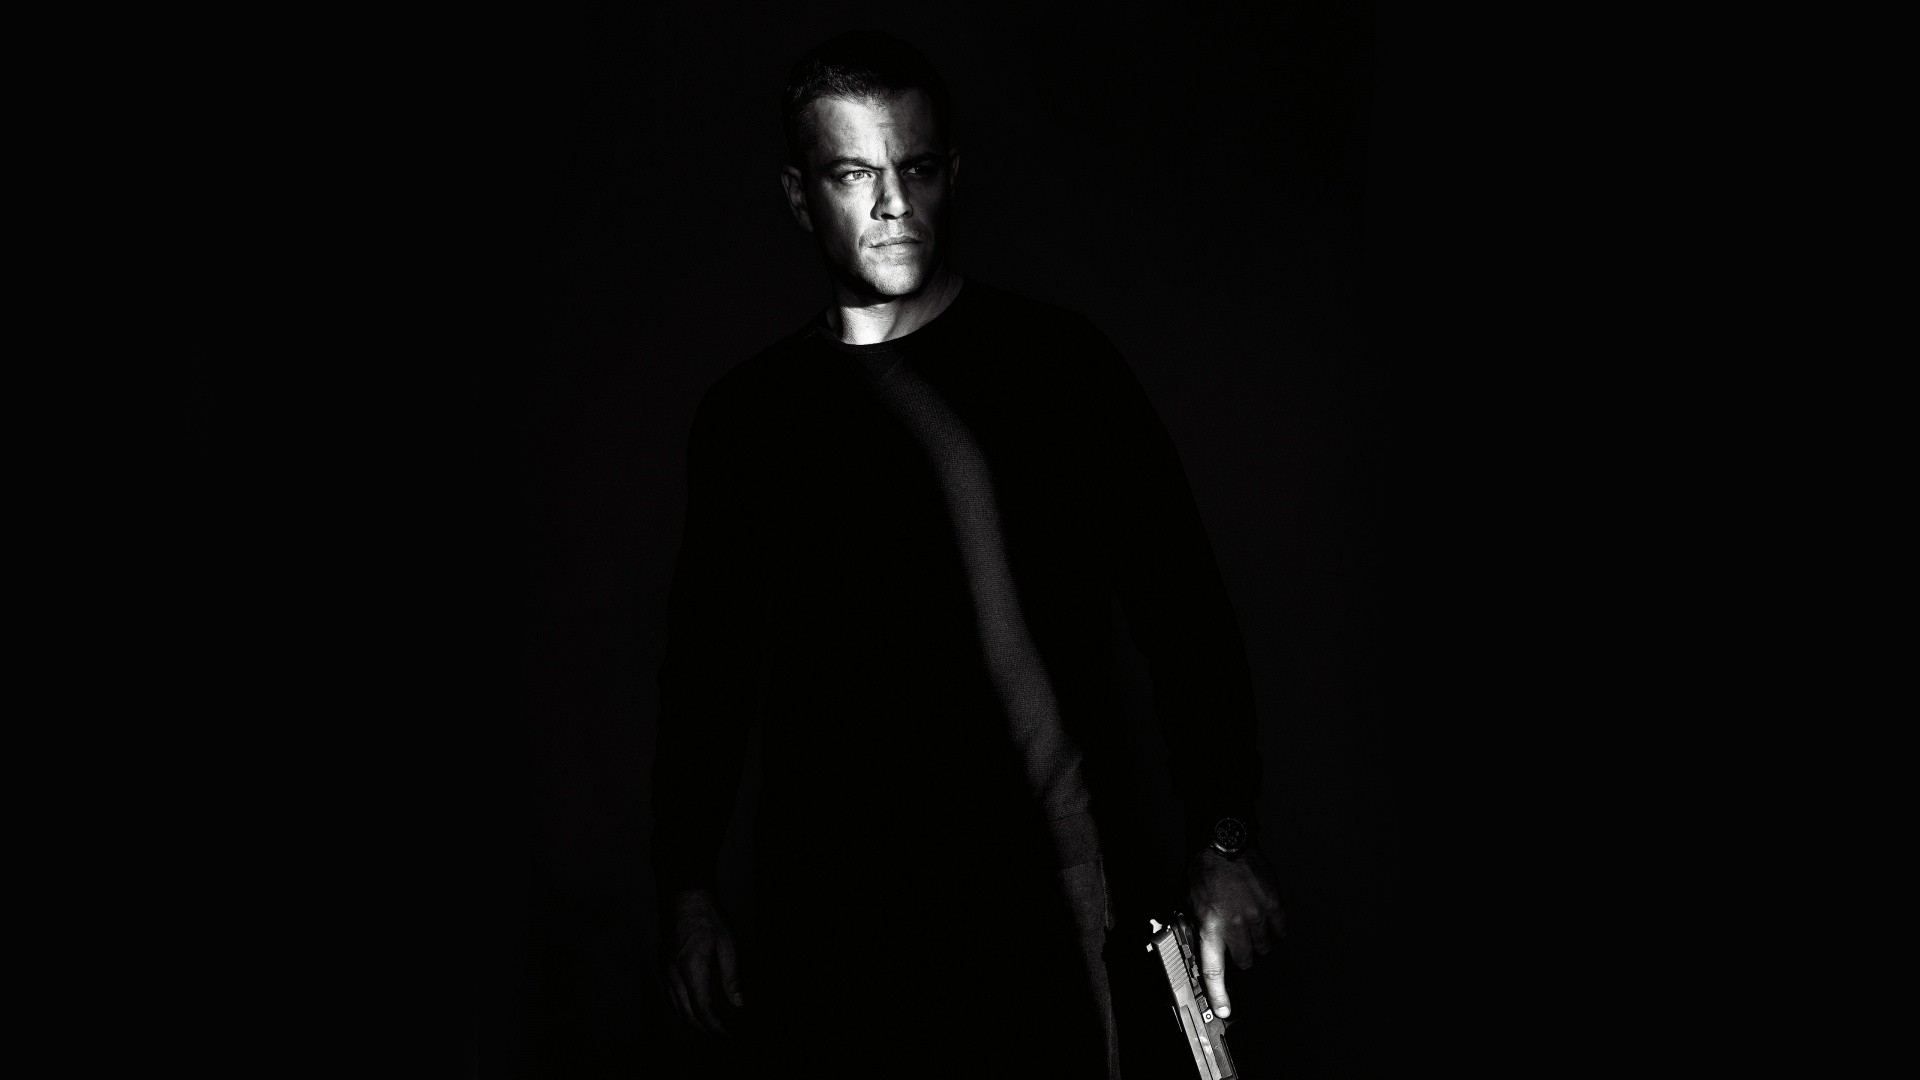 People 1920x1080 Matt Damon monochrome The Bourne Legacy gun shadow men weapon movies actor black background